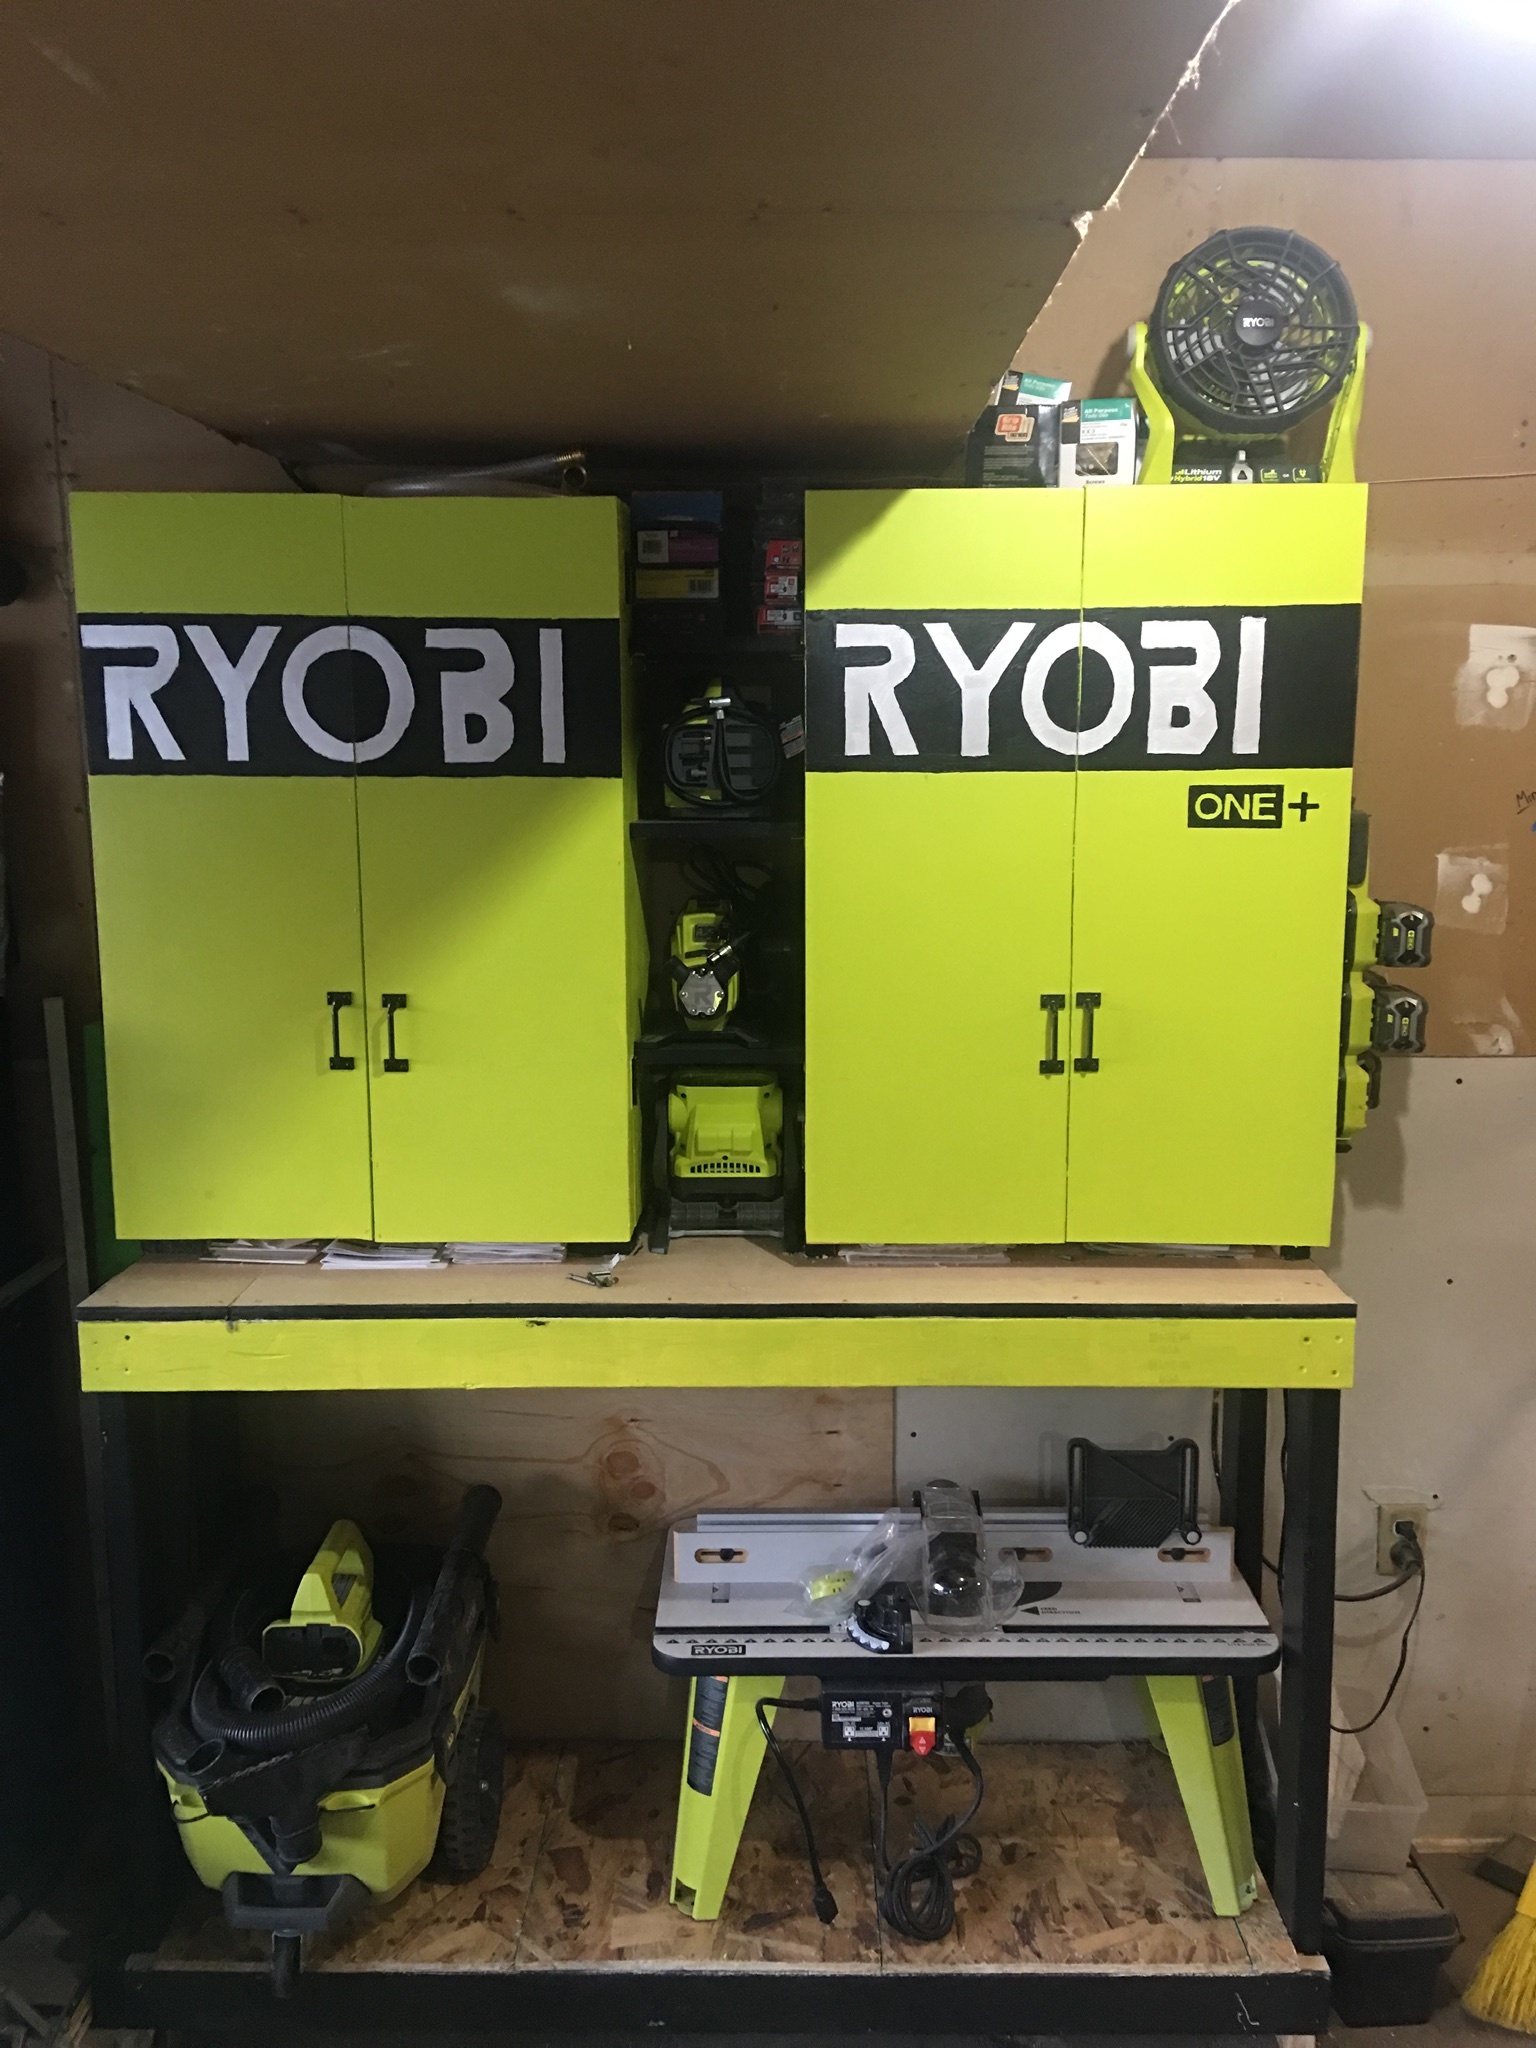 Ryobi storage station - RYOBI Nation Projects